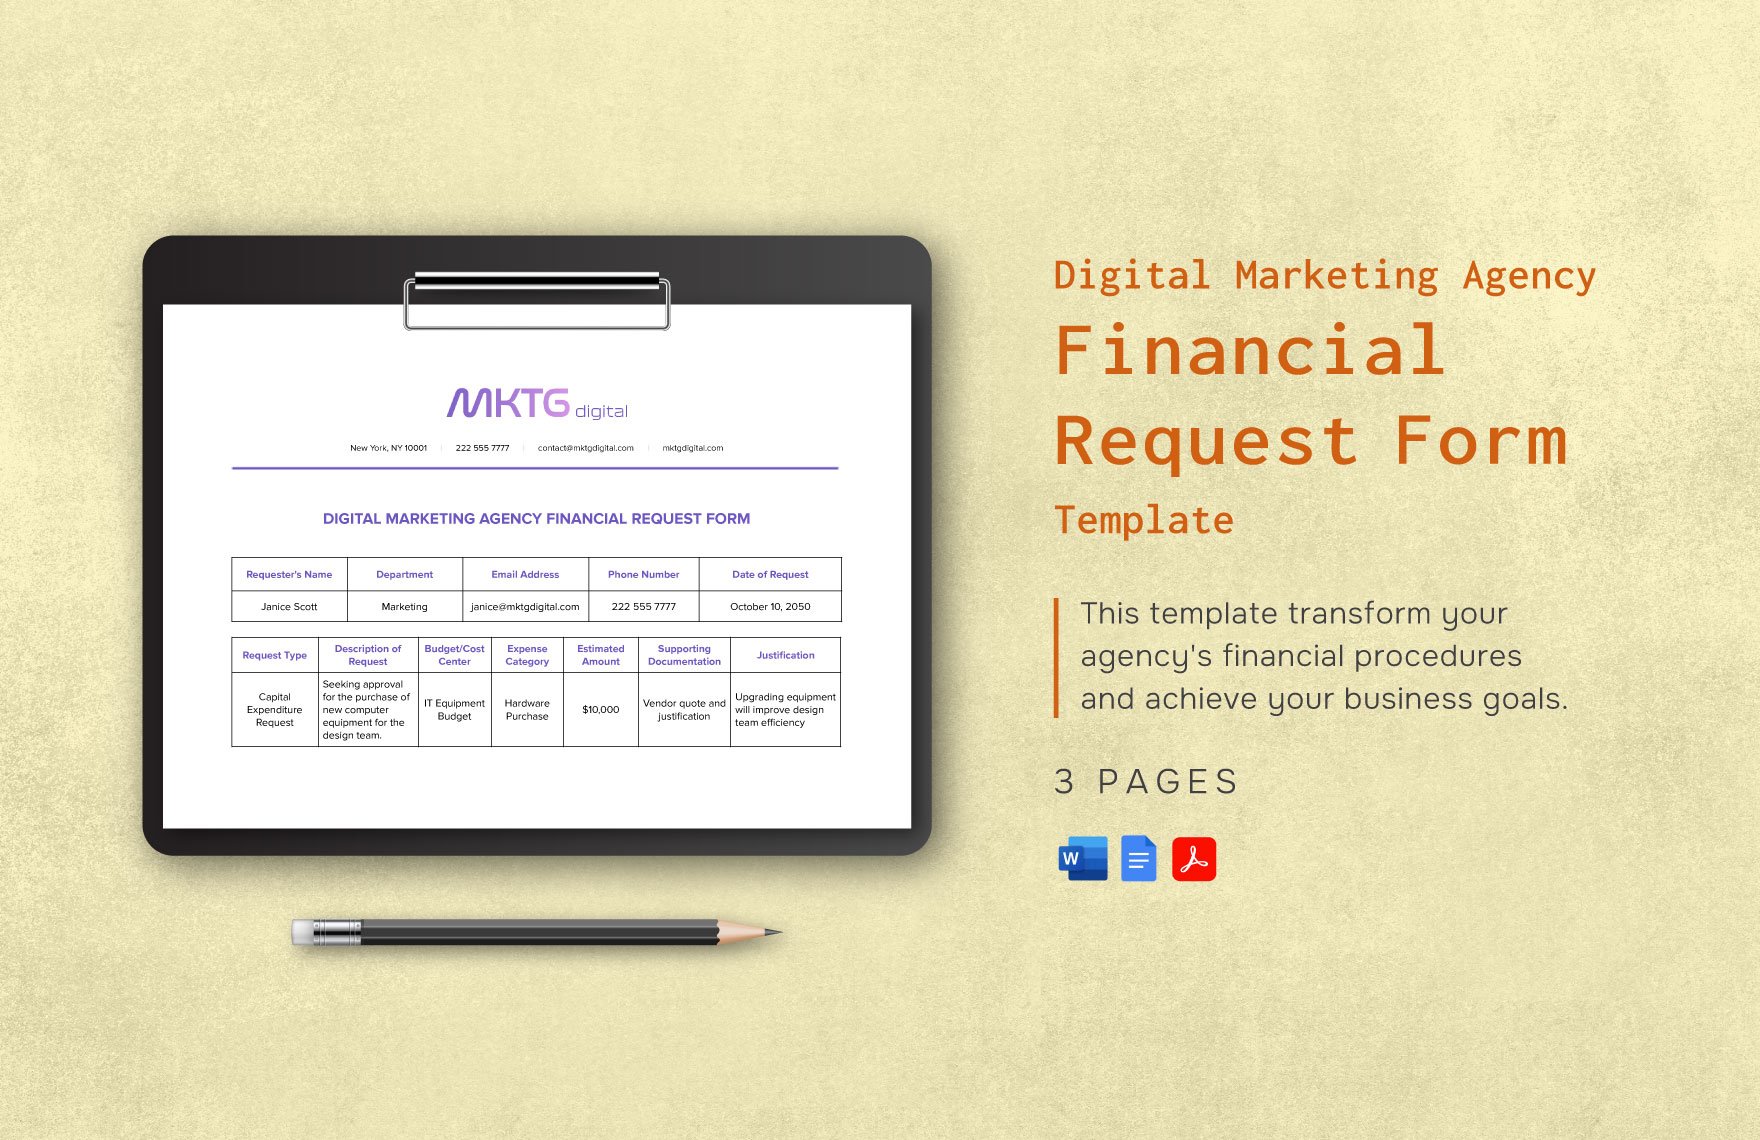 Digital Marketing Agency Financial Request Form Template in Word, Google Docs, PDF